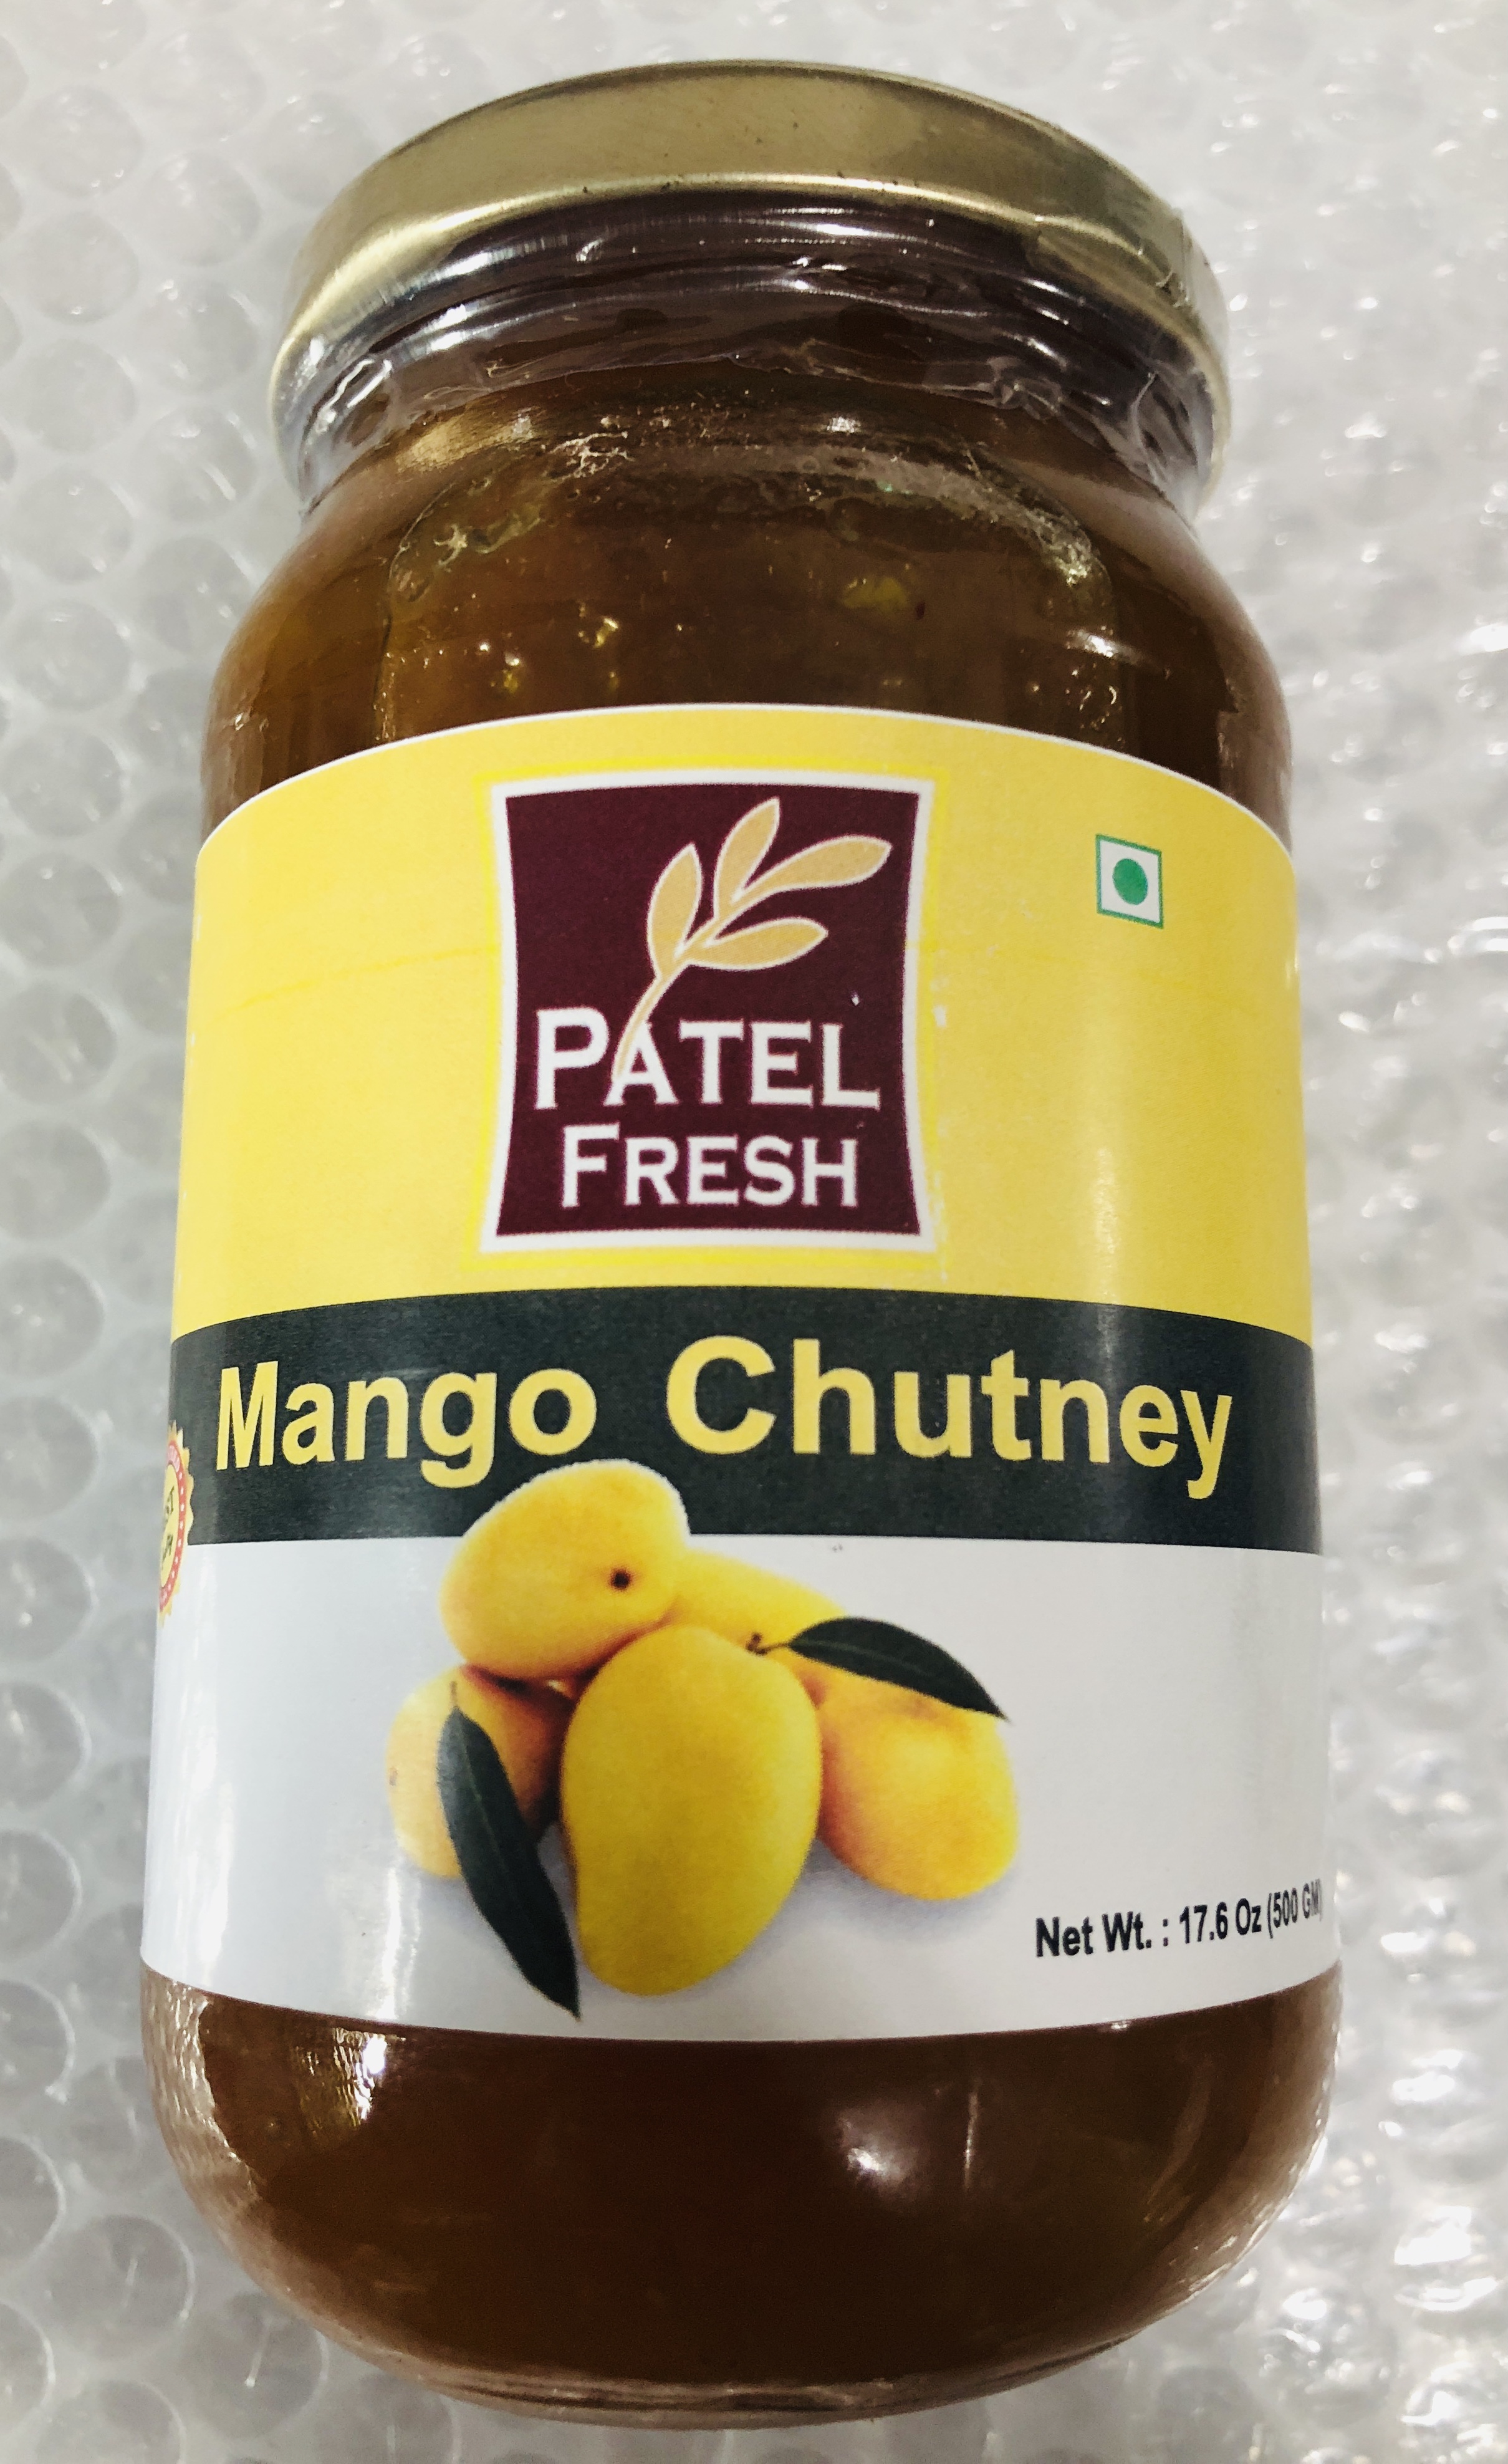 Mango Chutney  ชัทนี่ มะม่วง นำเข้าจากอินเดีย 500g.